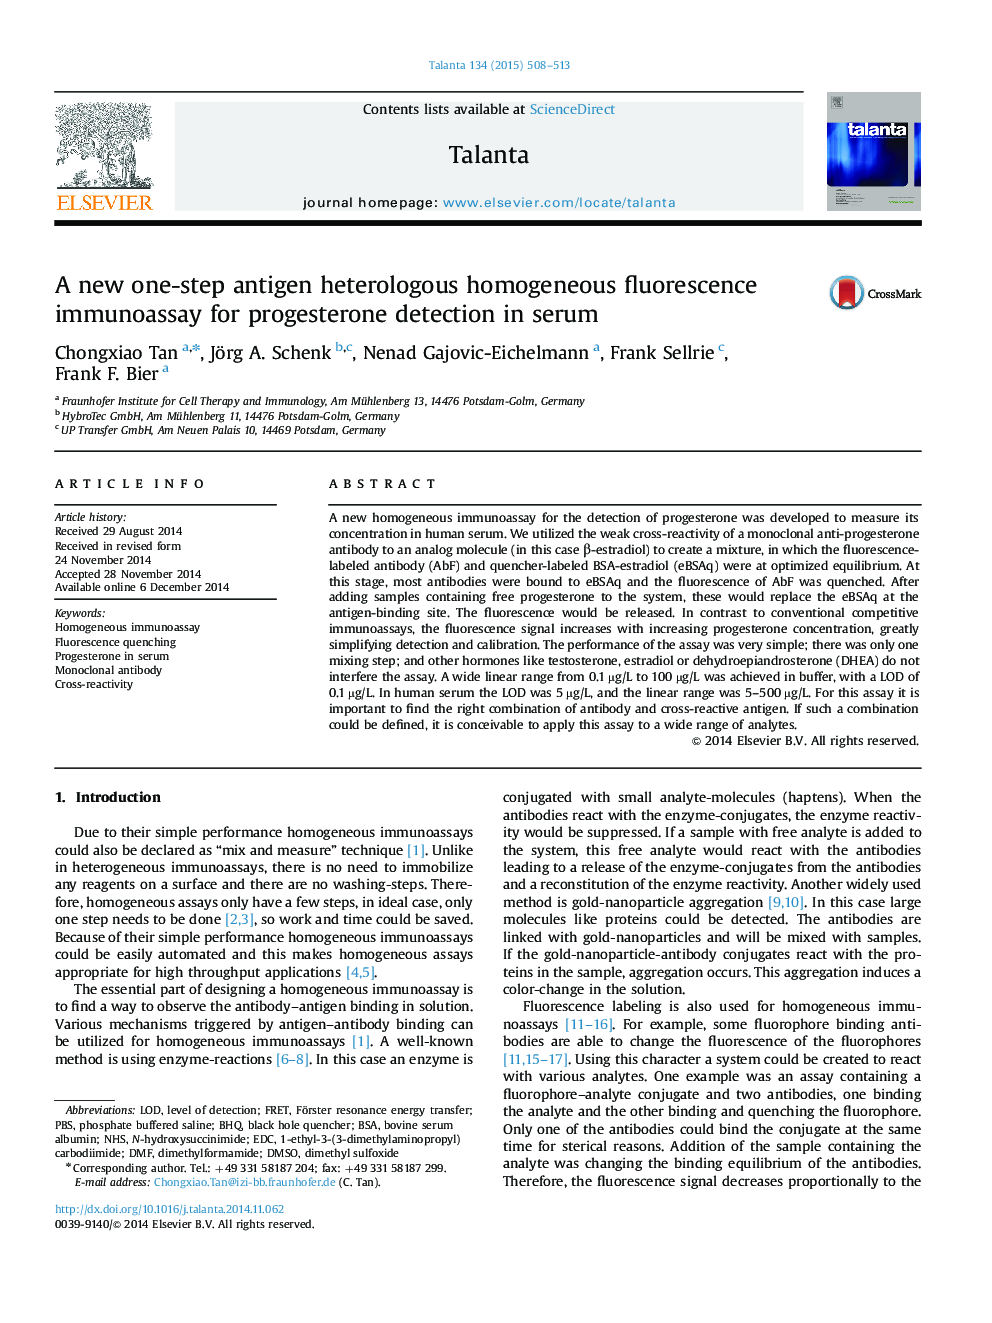 A new one-step antigen heterologous homogeneous fluorescence immunoassay for progesterone detection in serum